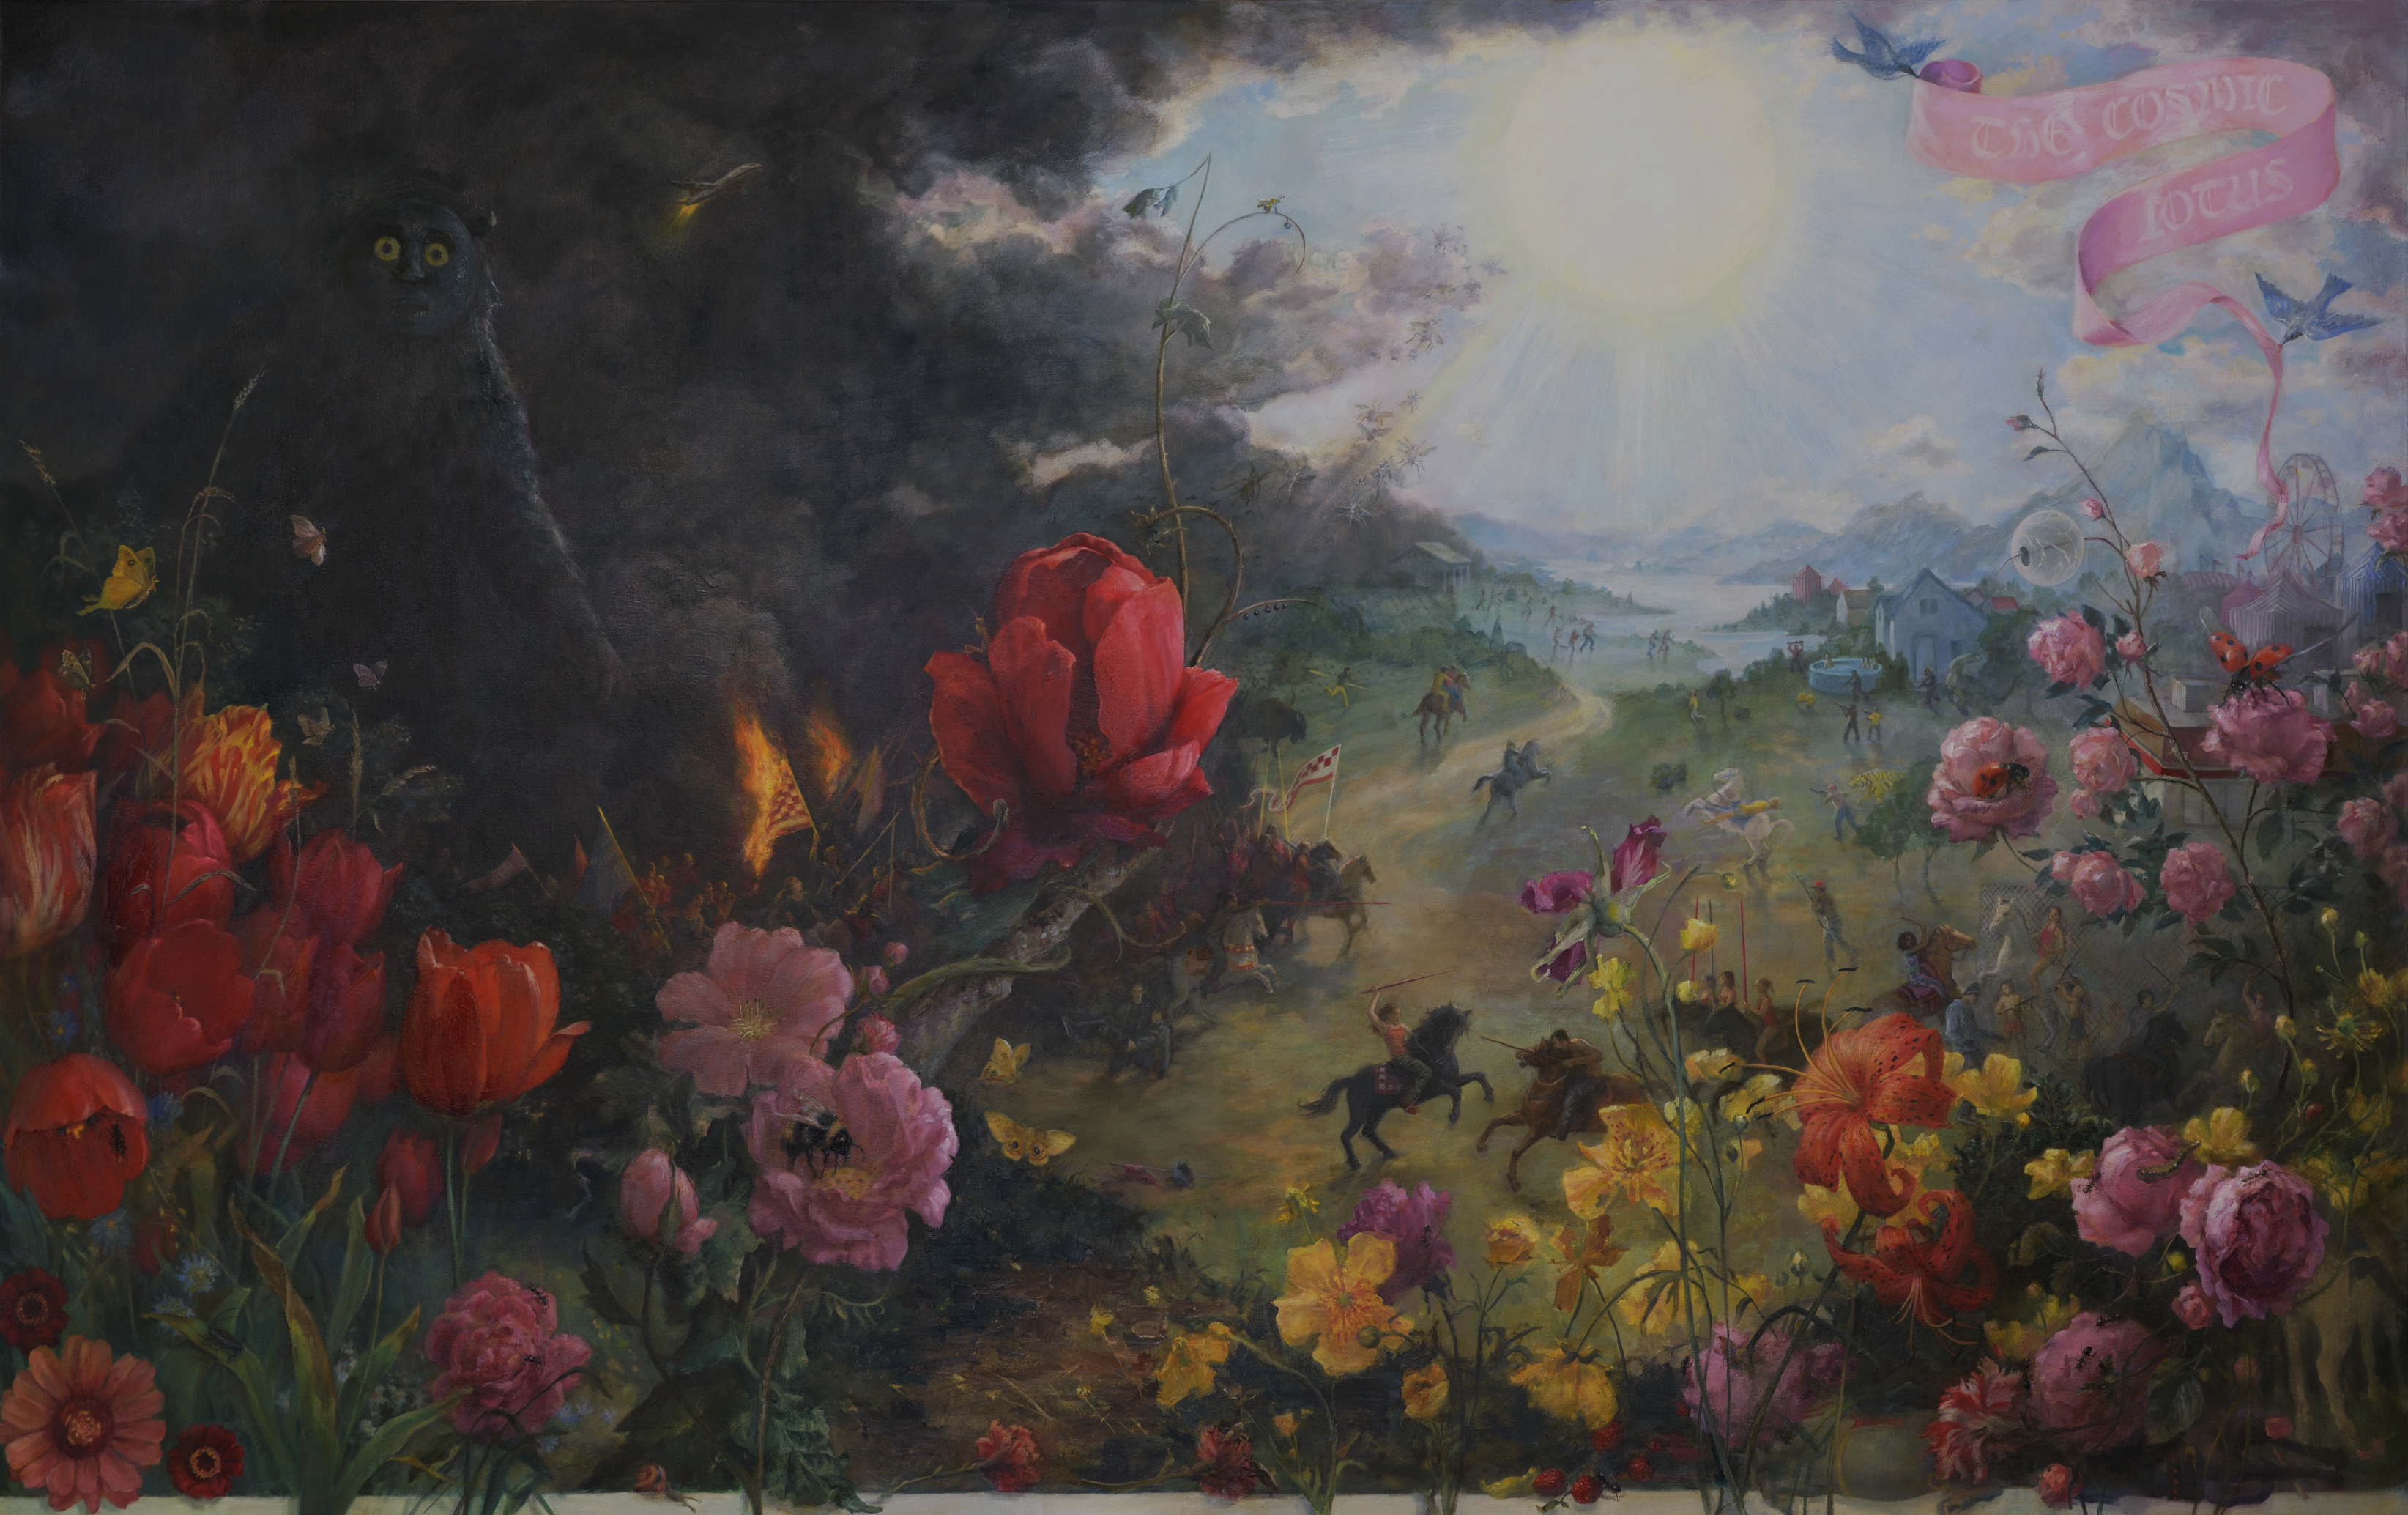 Kristy Gordon, “The Cosmic Lotus,” 2019, oil on canvas, 60 x 96 in.